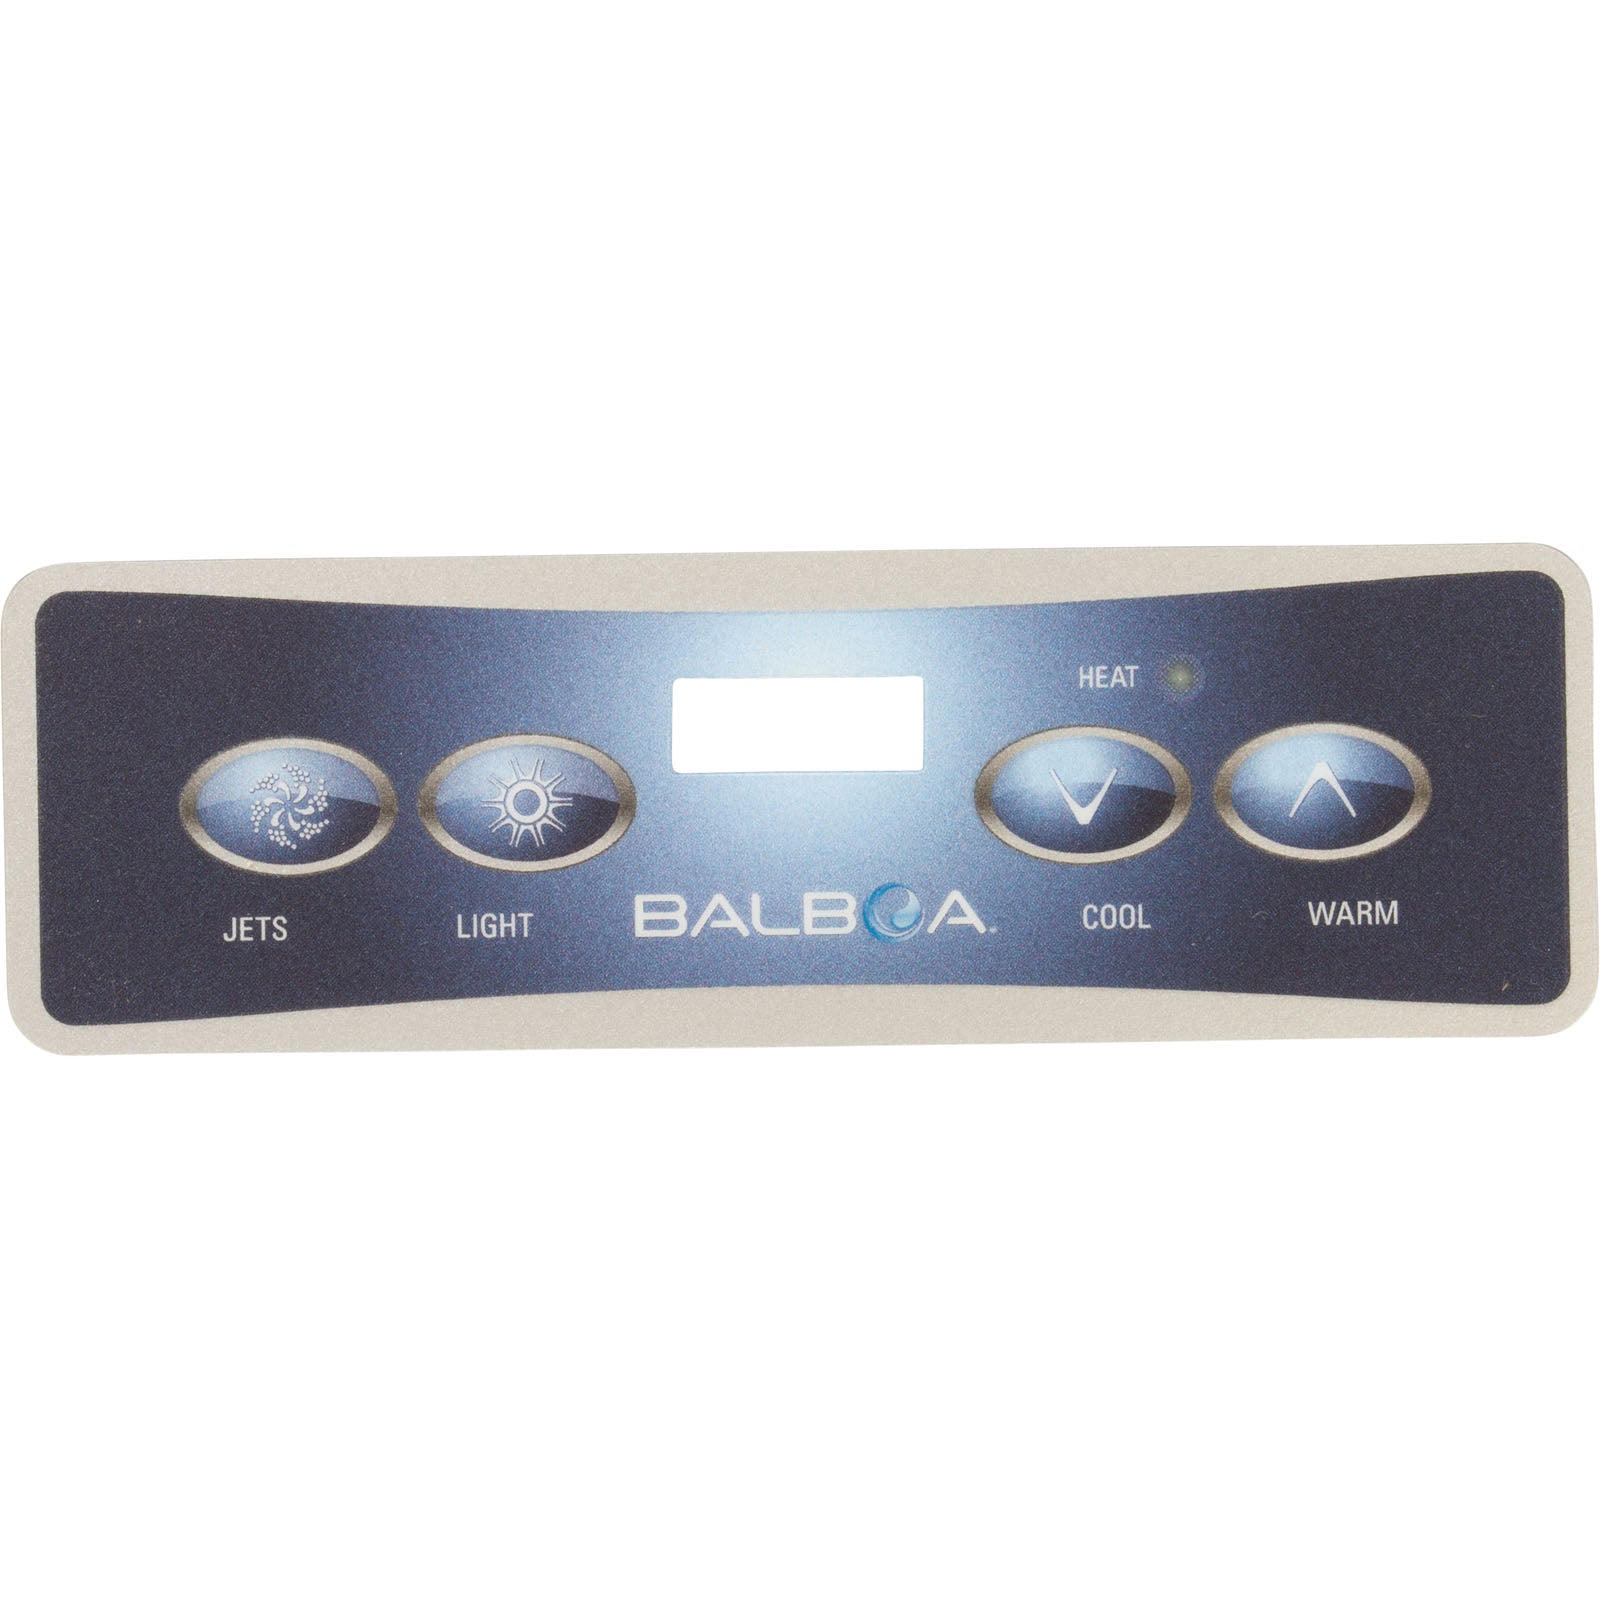 Balboa 4-Button VL401 Digital Duplex LCD Topside Panel Overlay (11885)